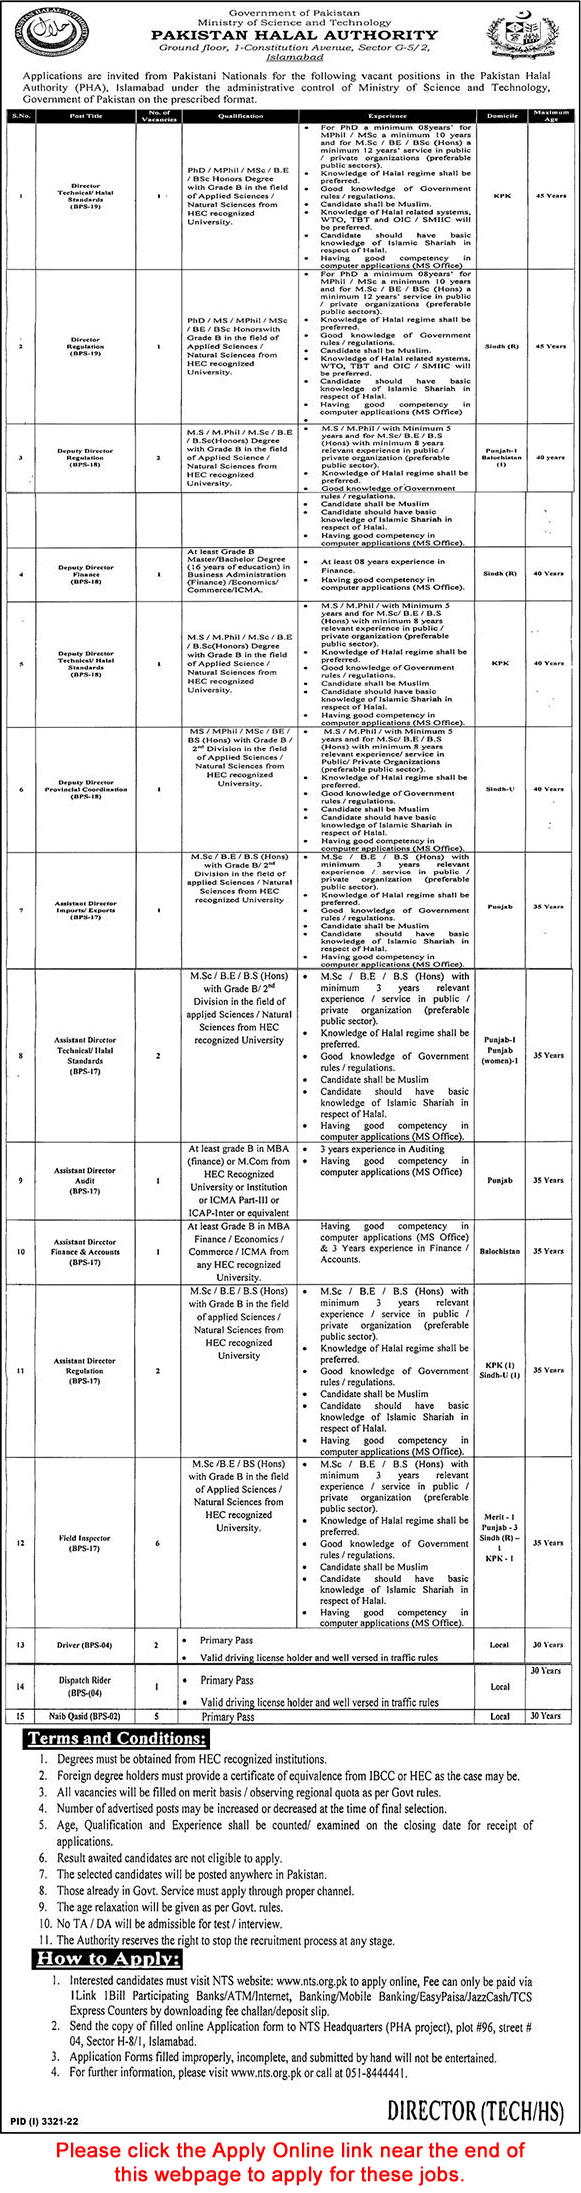 Pakistan Halal Authority Jobs 2022 November / December NTS Apply Online Assistant Directors & Others Latest